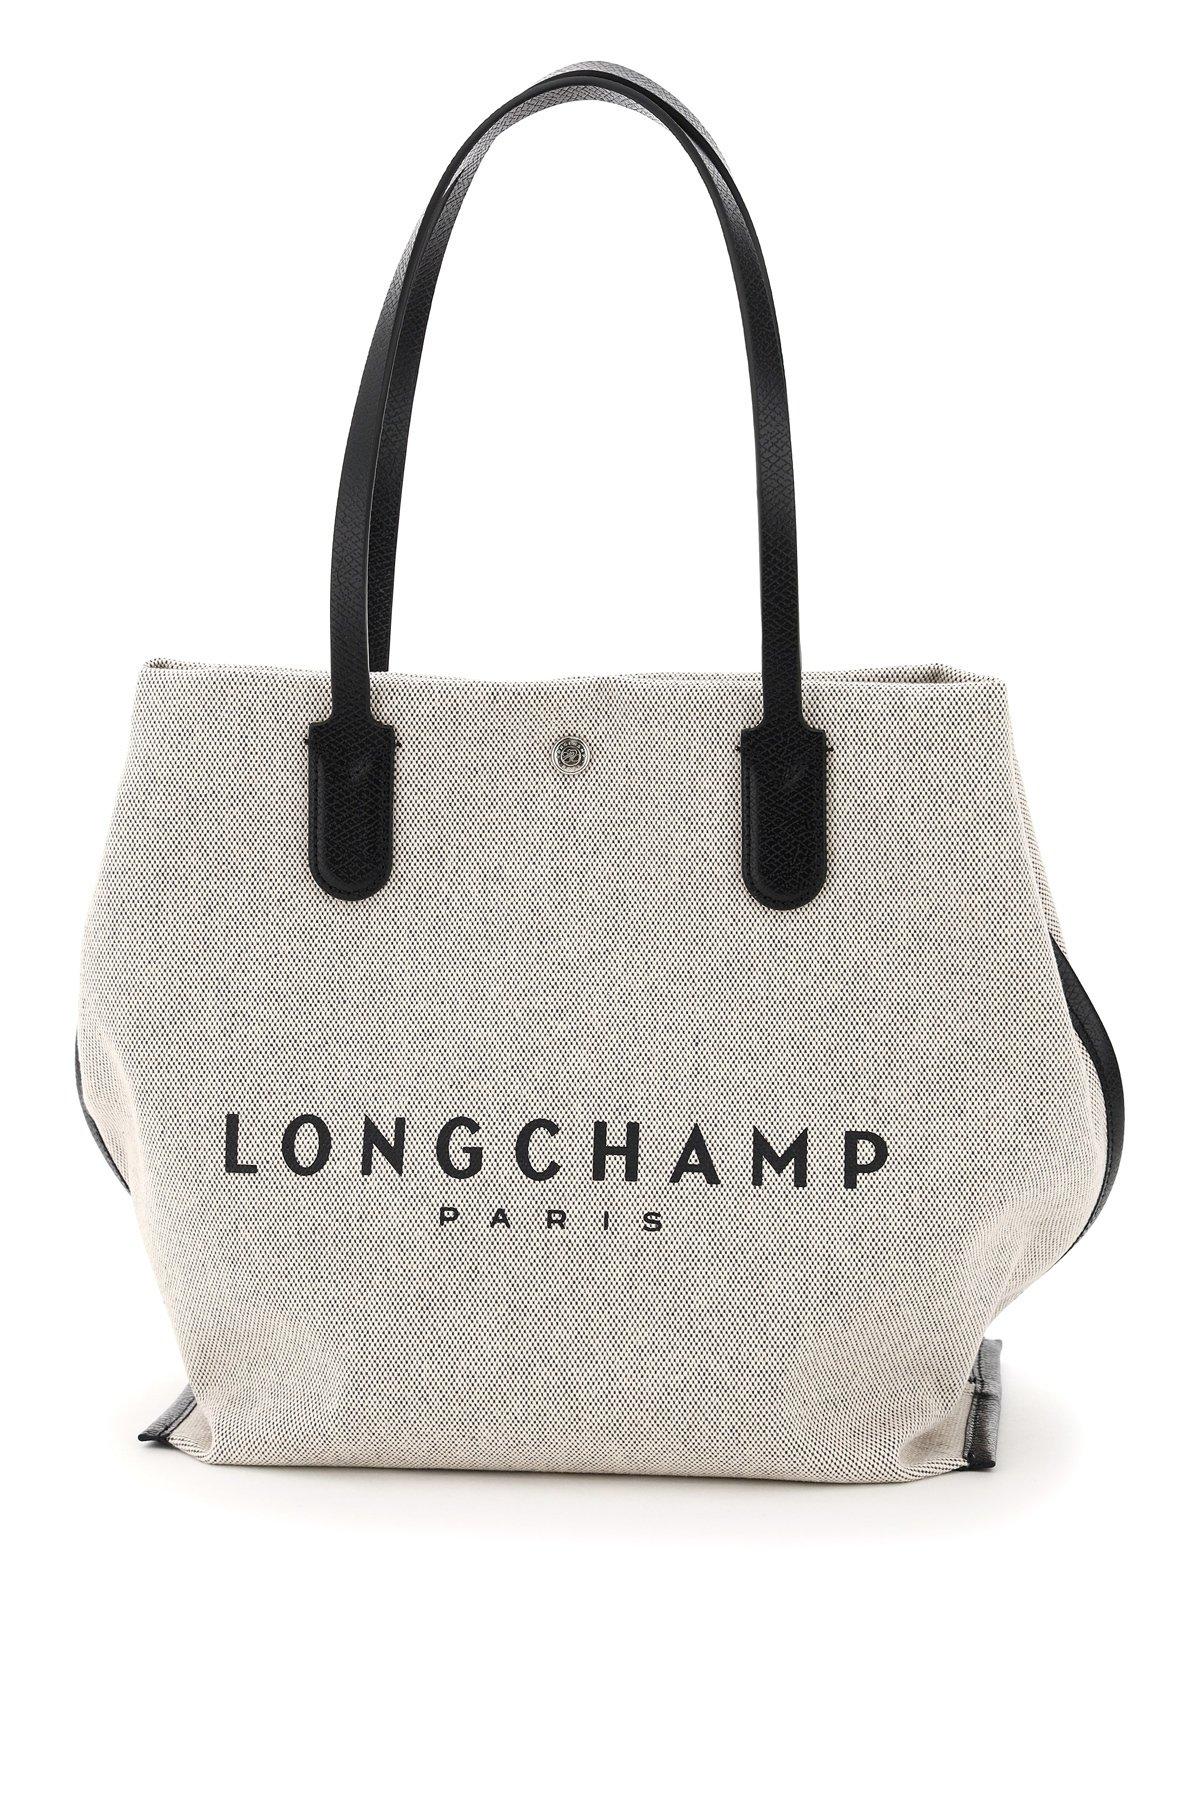 longchamp canvas tote bag